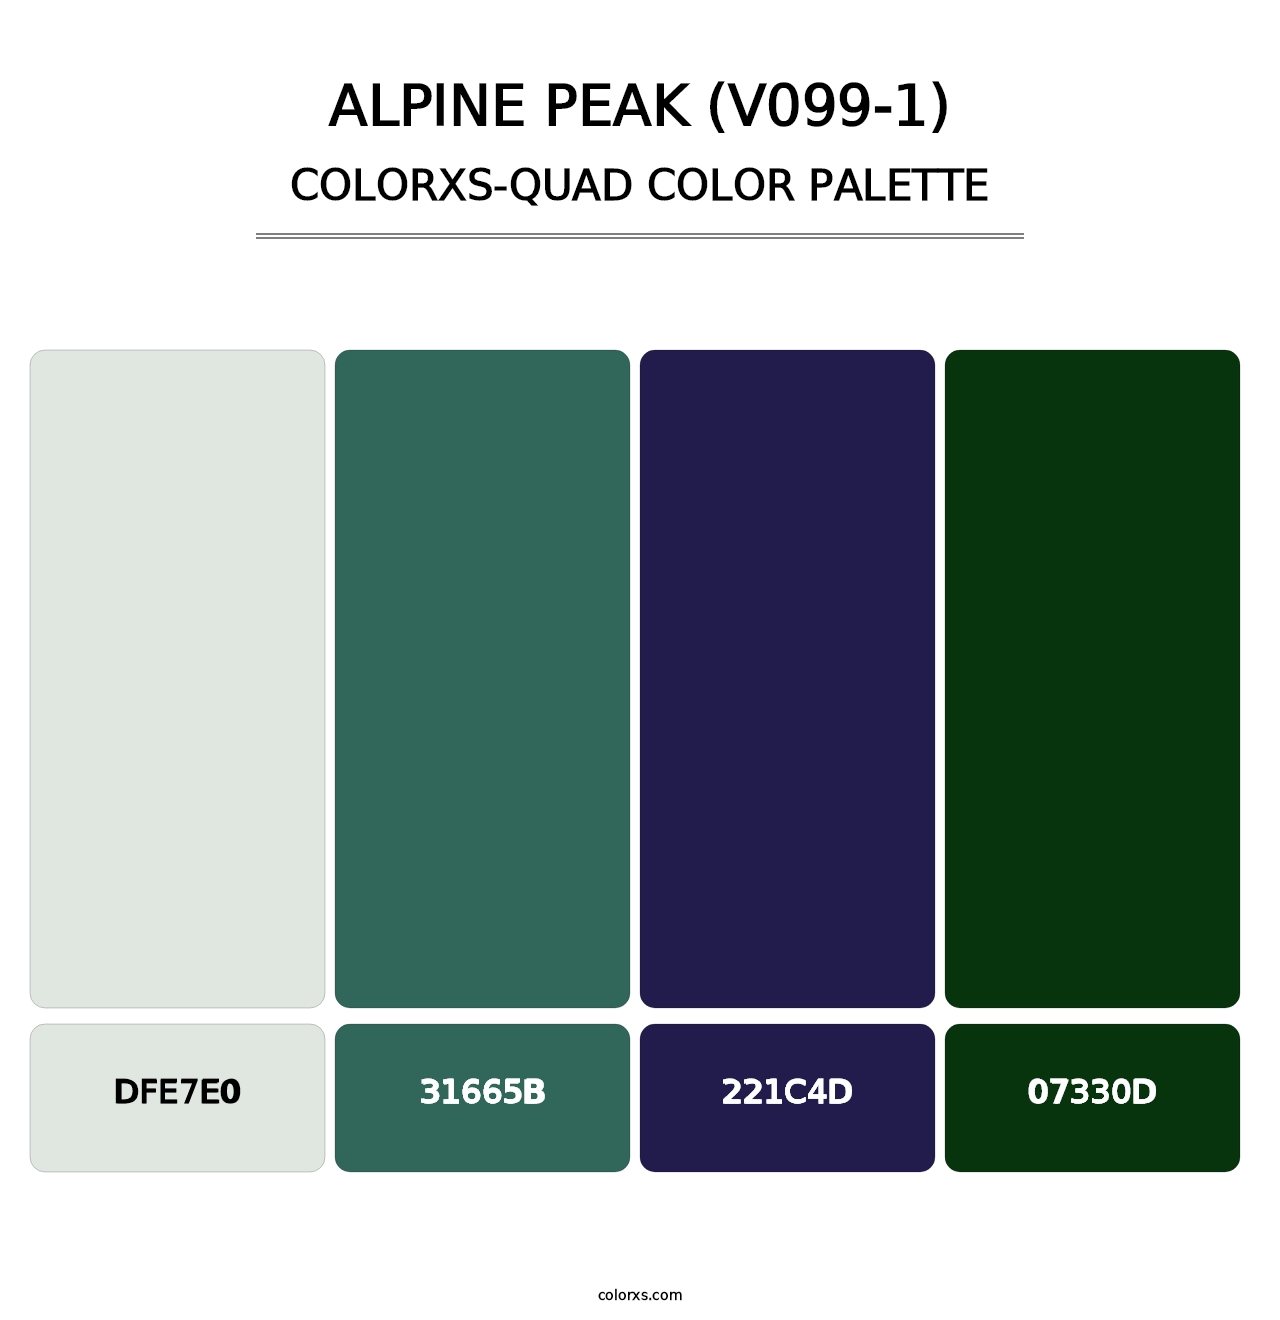 Alpine Peak (V099-1) - Colorxs Quad Palette